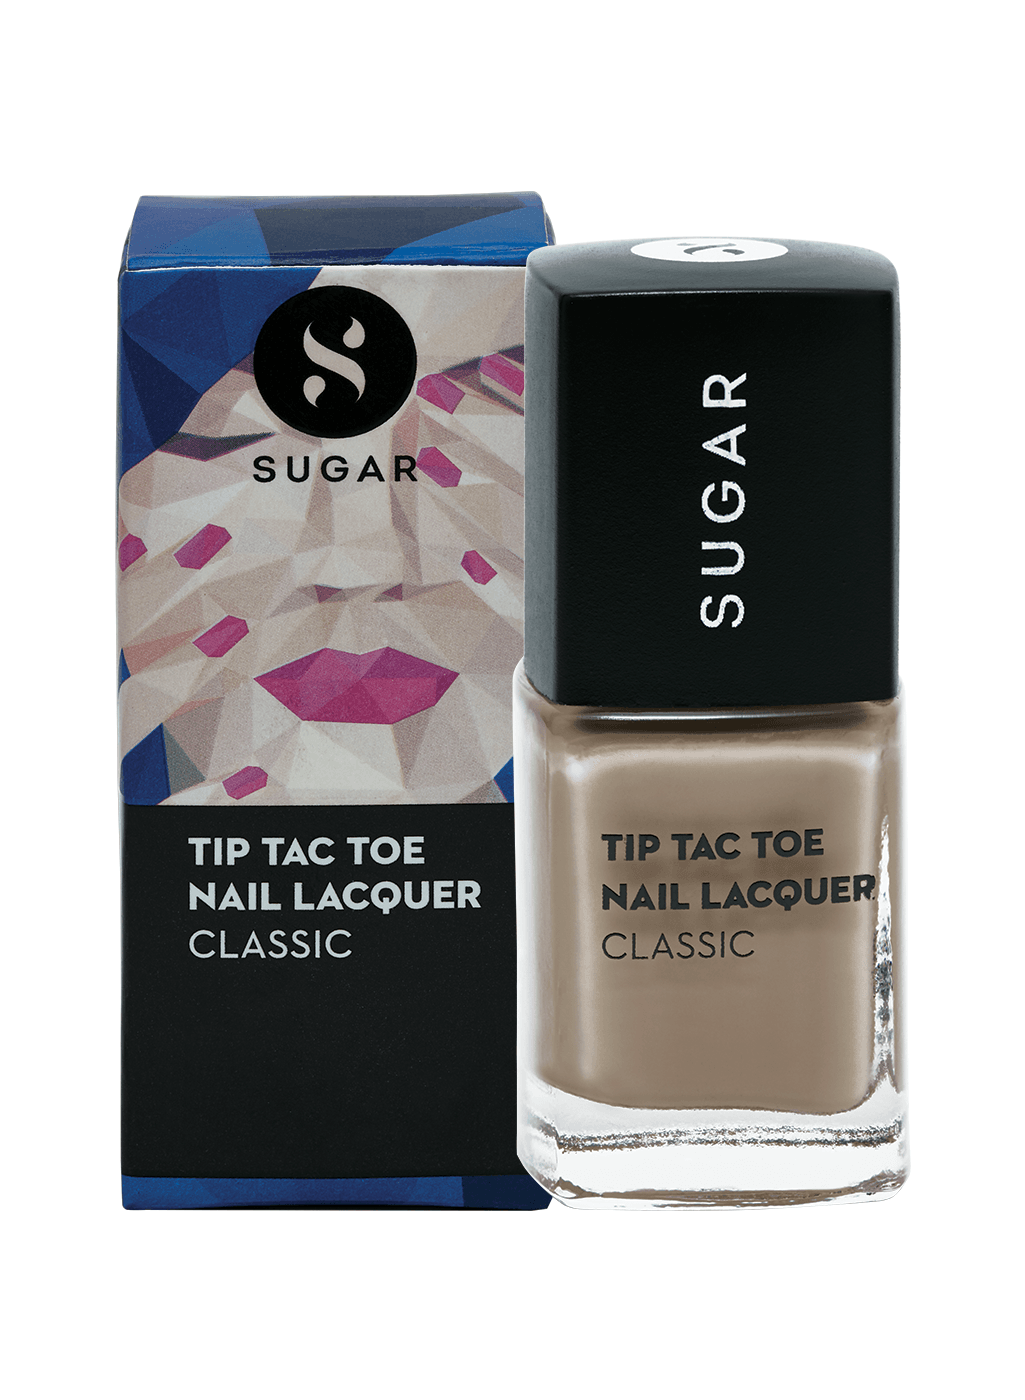 Tip Tac Toe Nail Lacquer - 011 Cream Come True (Brown Nude)